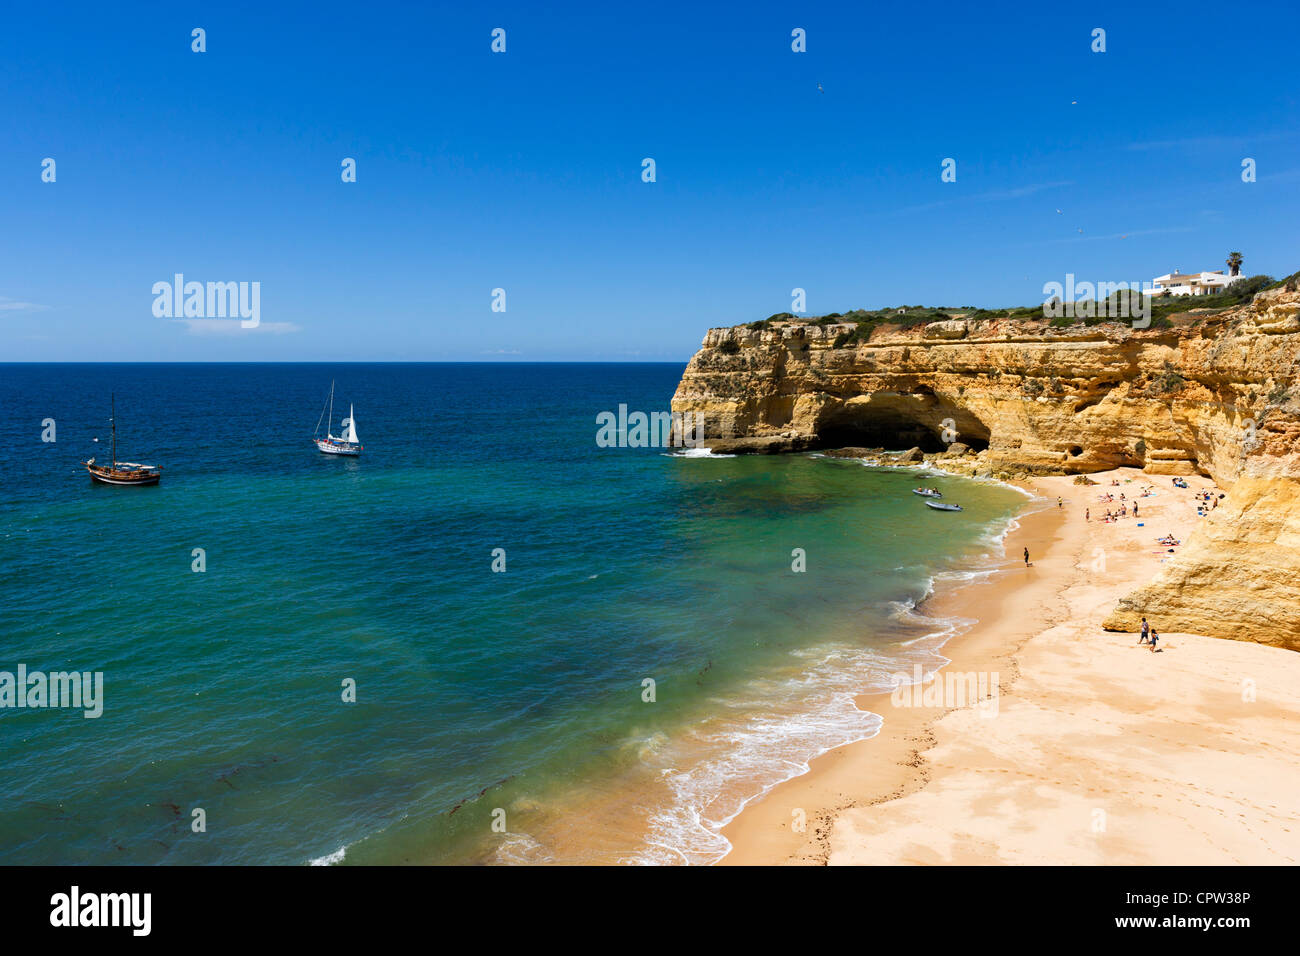 Tourists from a boat excursion having a lunch barbecue on a deserted beach at Praia da Marinha near Benagil, Algarve, Portugal Stock Photo